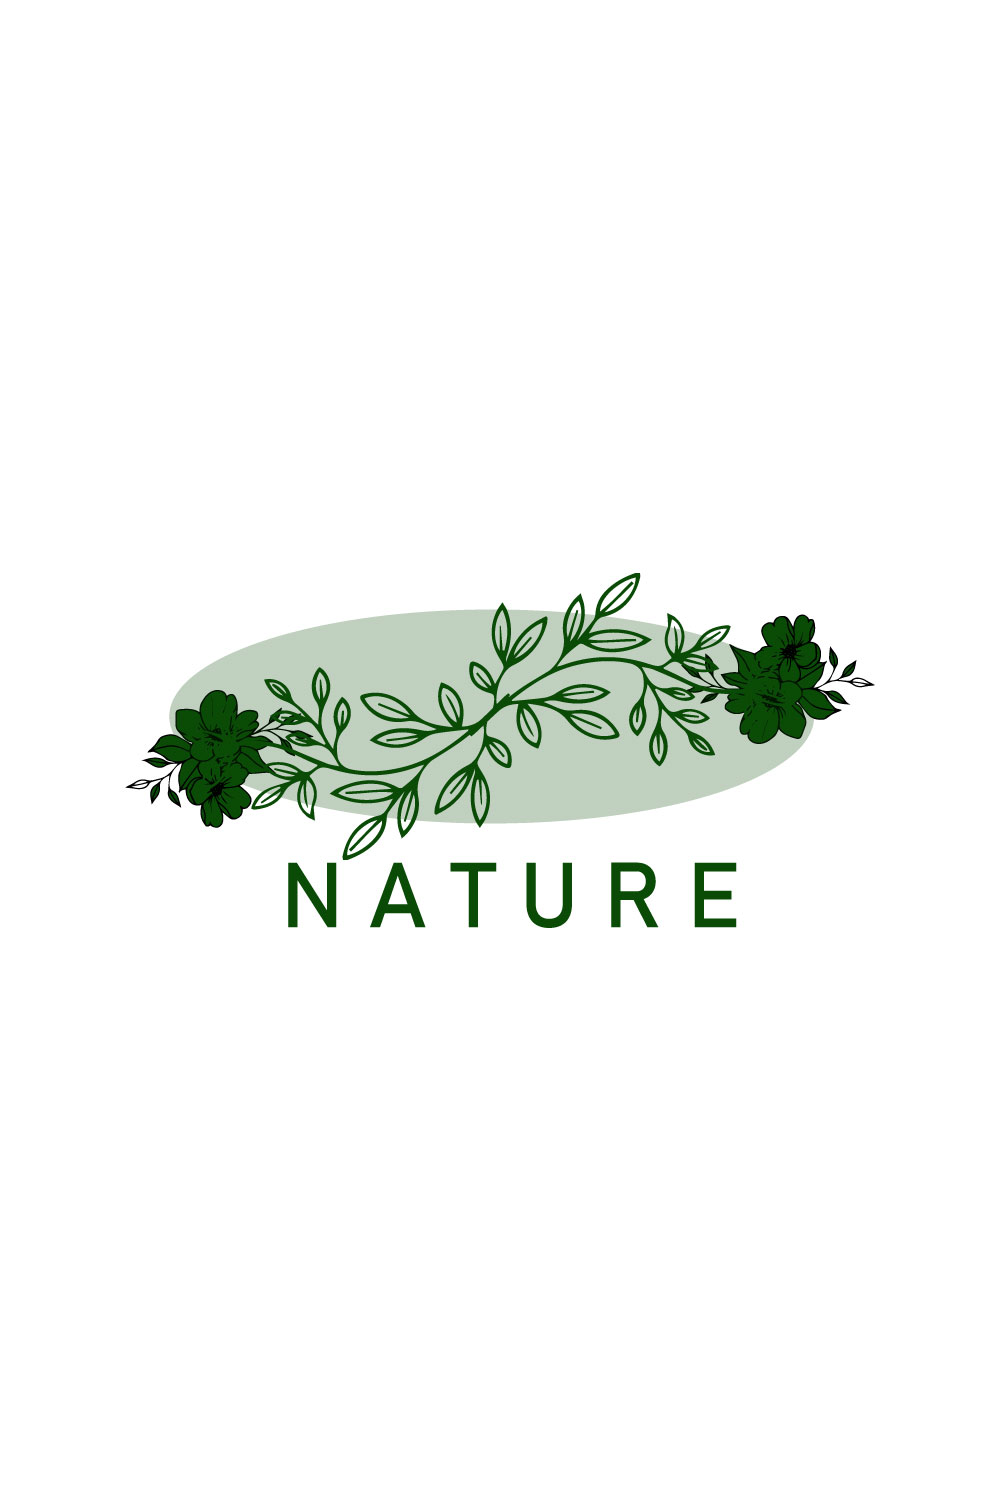 Free vintage botanical naural logo pinterest preview image.